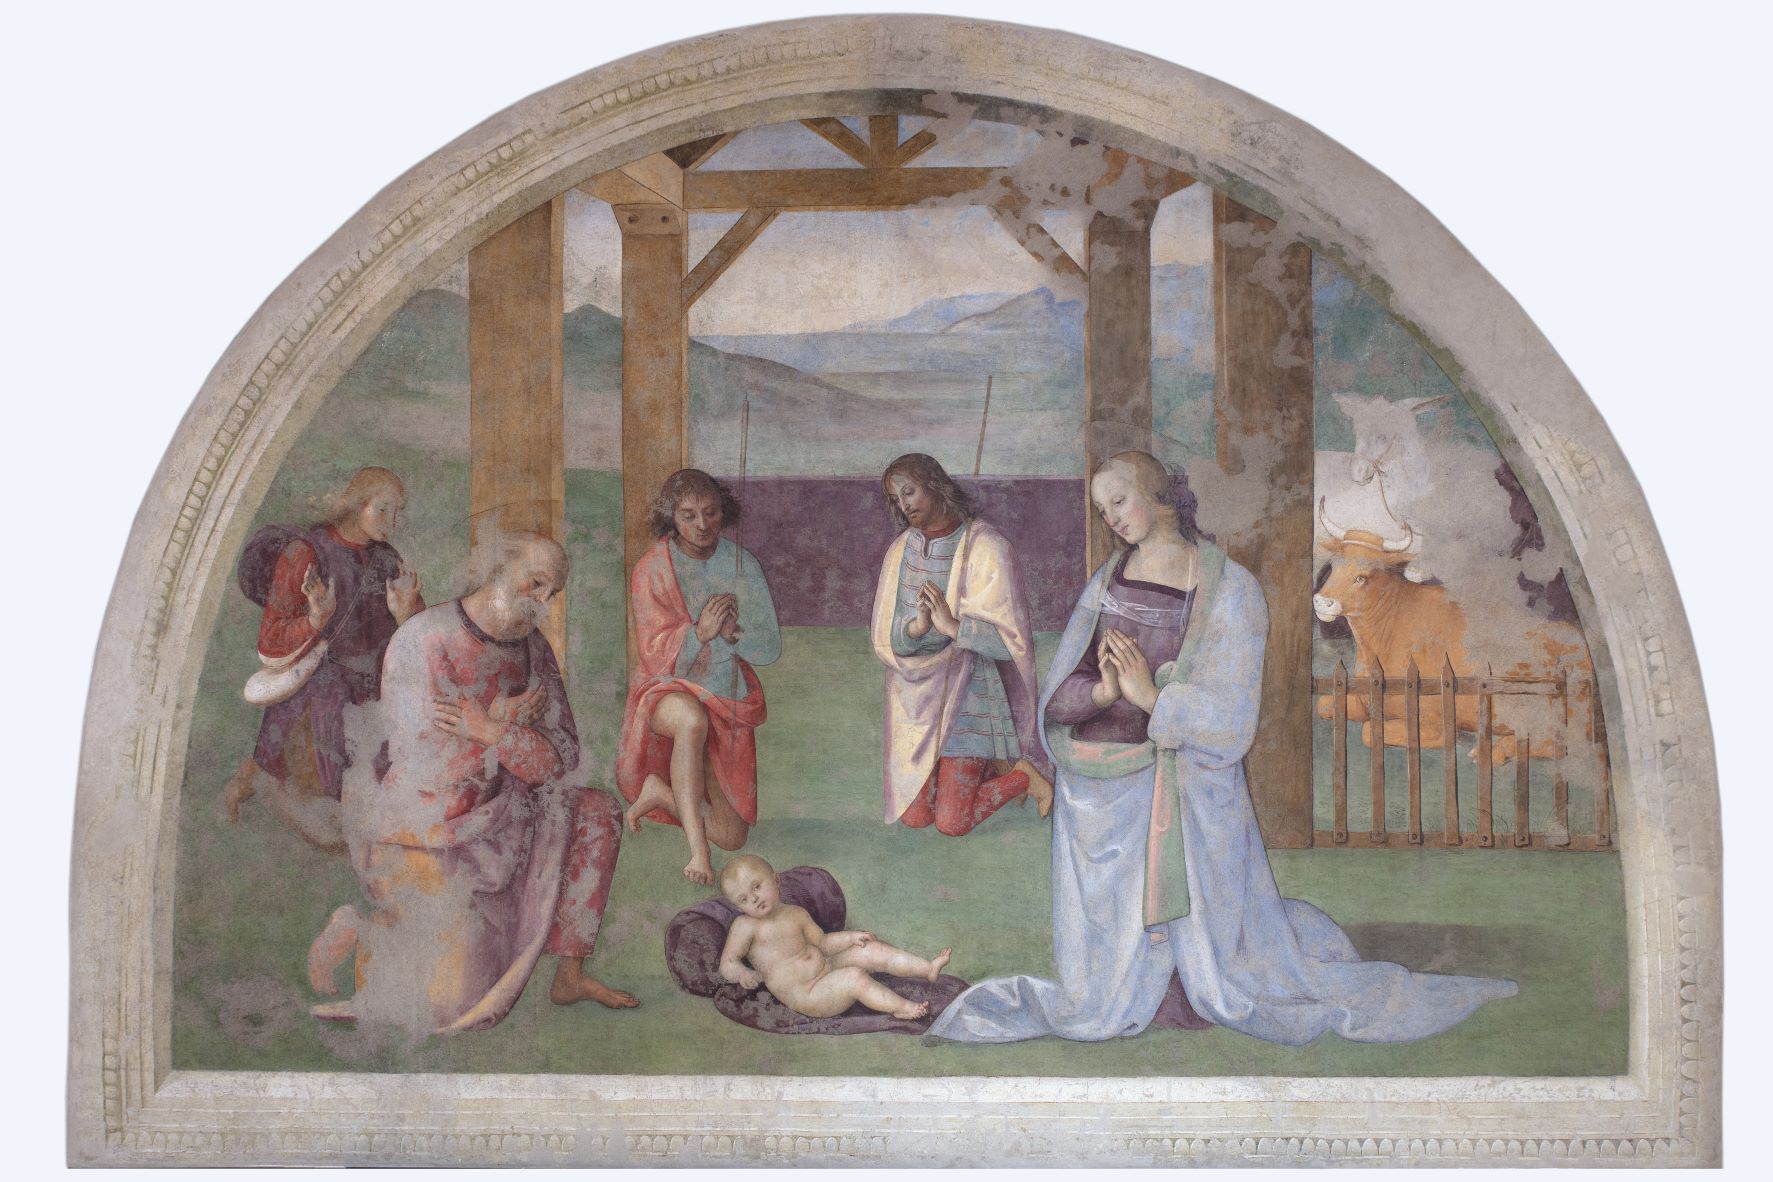 Perugino, Adoration of the Shepherds (c. 1502; detached fresco, 246 x 356 cm; Perugia, Galleria Nazionale dell'Umbria)